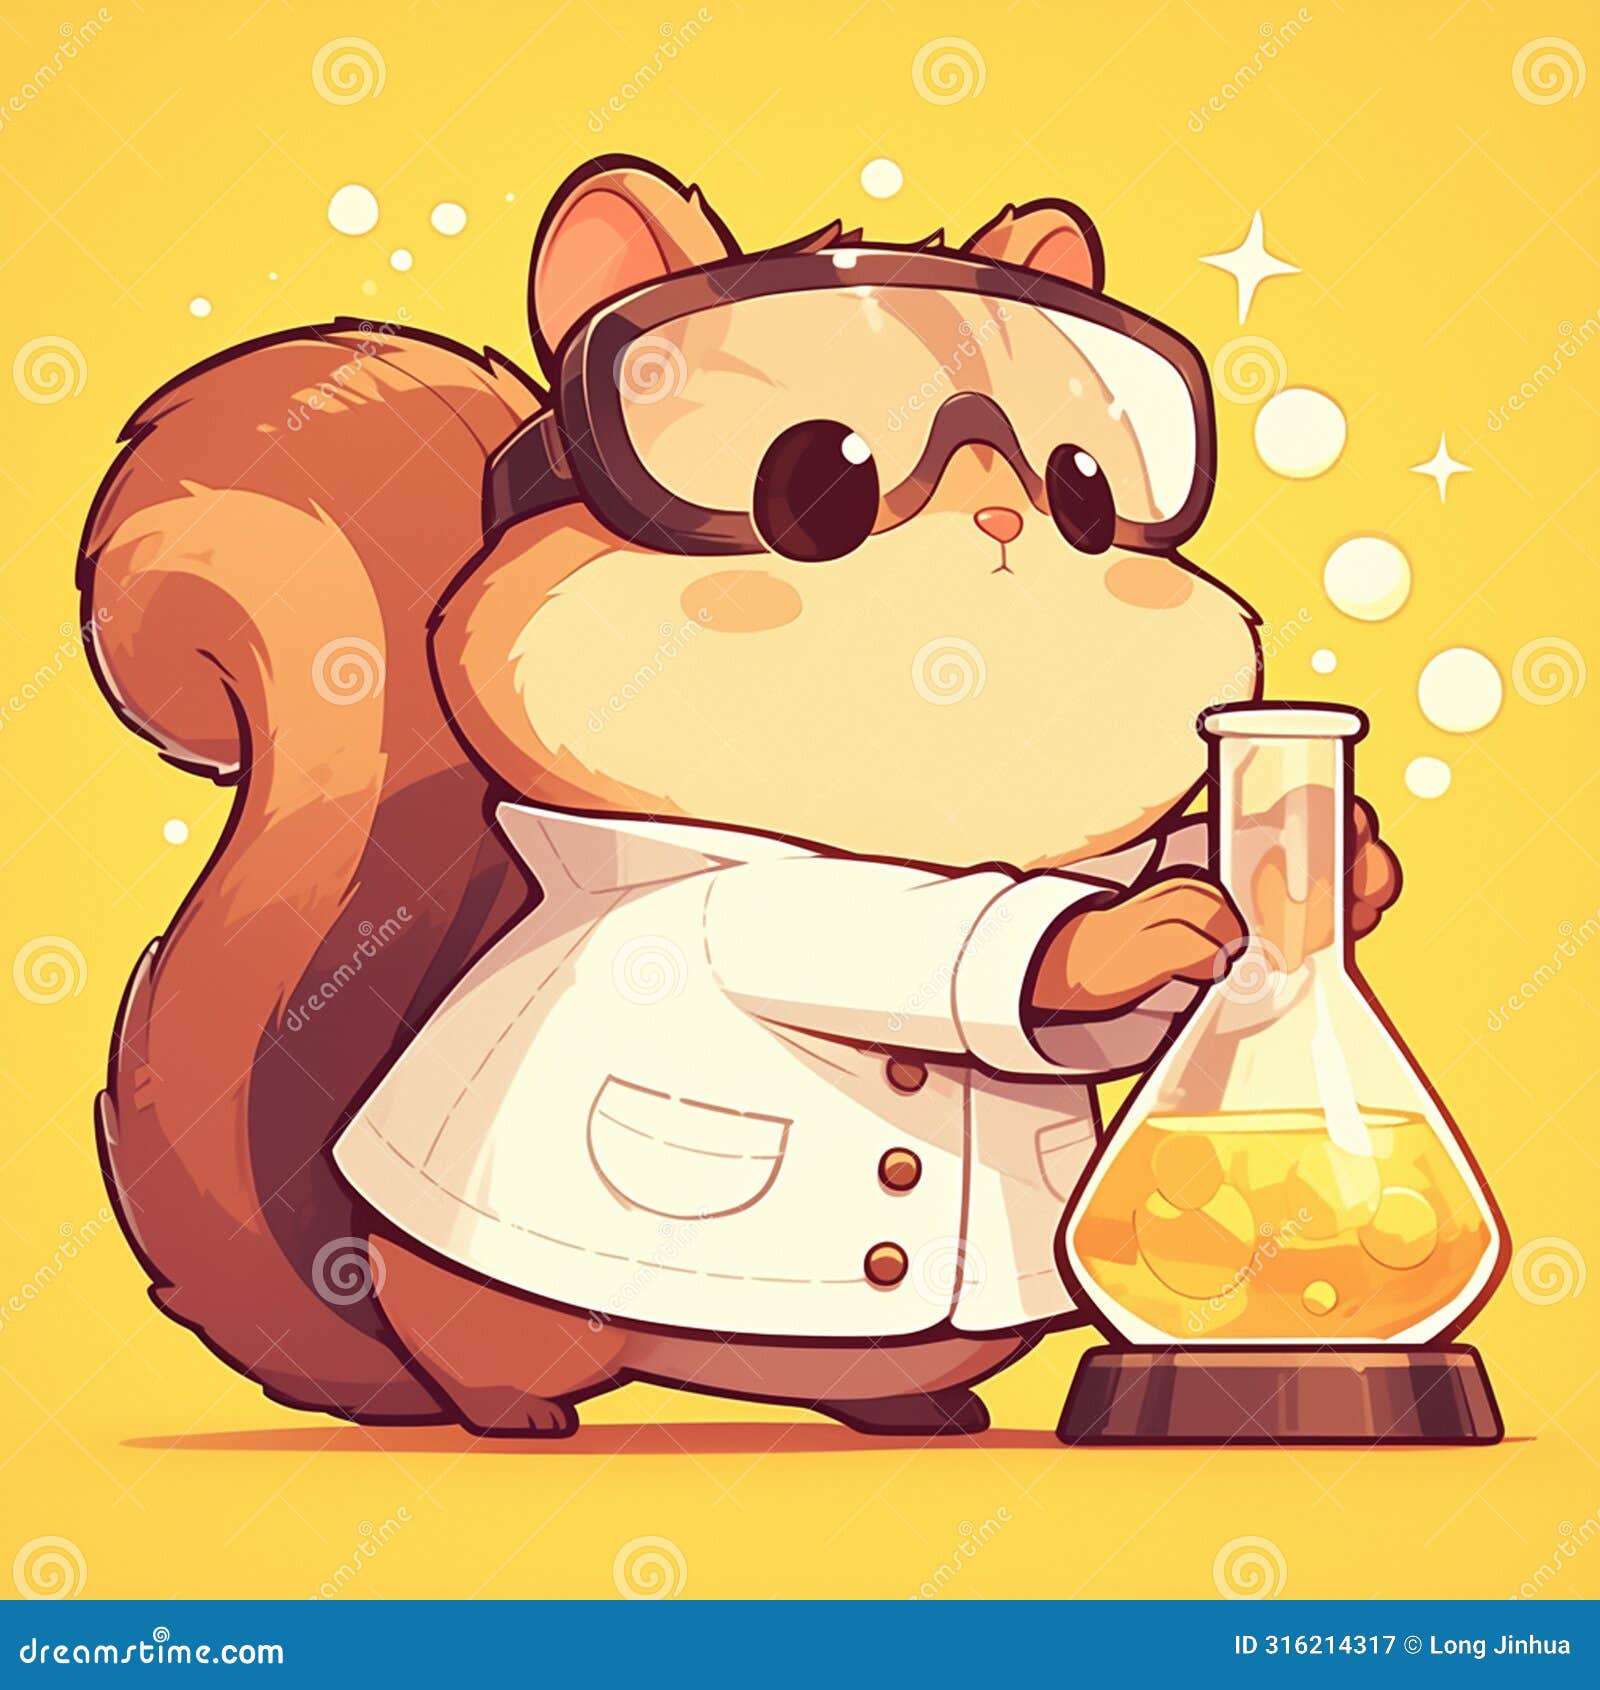 a nimble squirrel scientist cartoon style